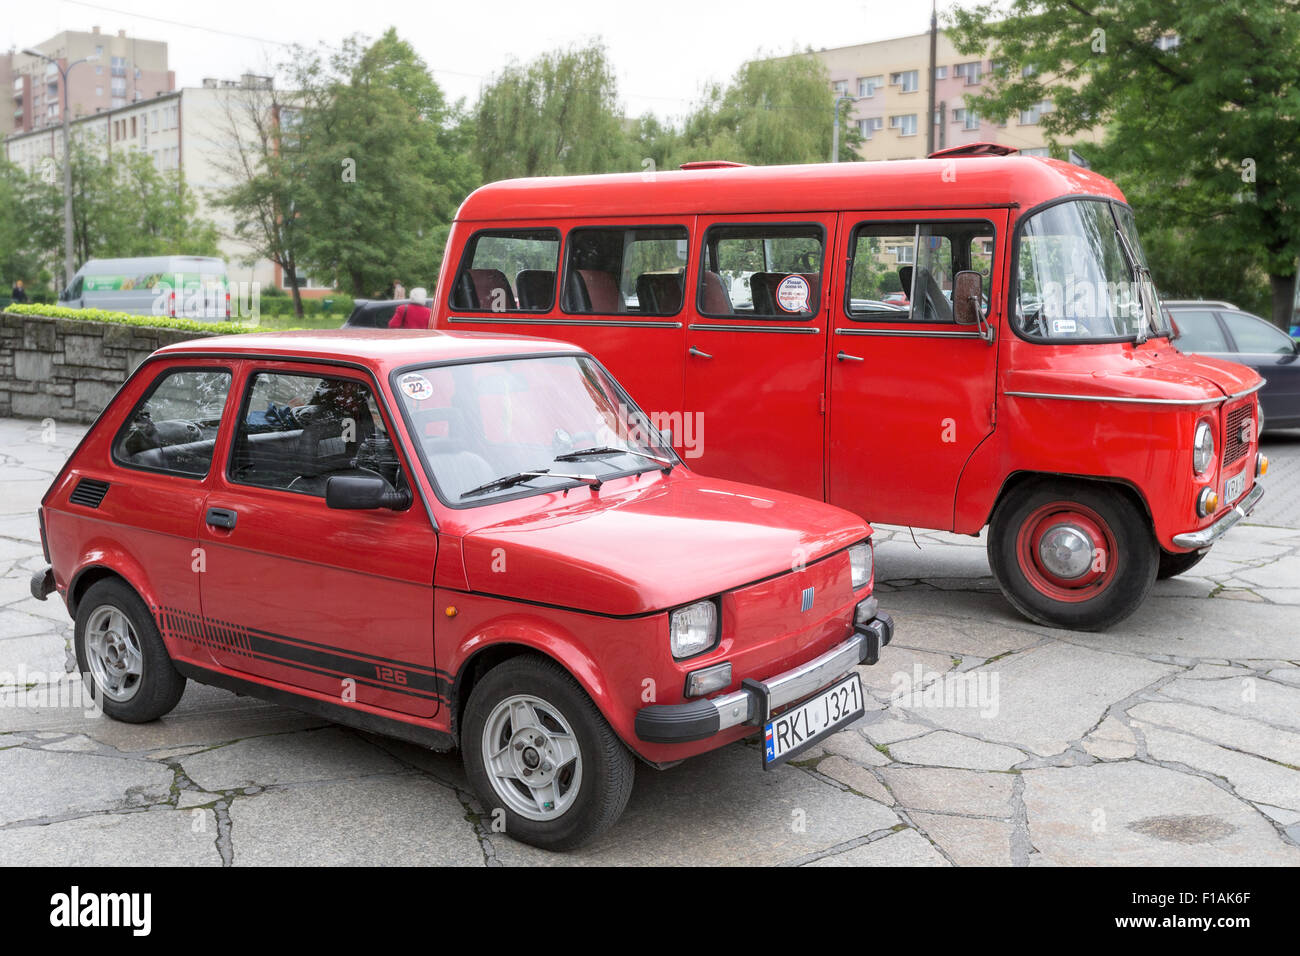 Nysa van & Polski-Fiat 126 car, Soviet Vehicles, Nowa Huta, (New Steel Works), Stalinist Krakow, Poland Stock Photo